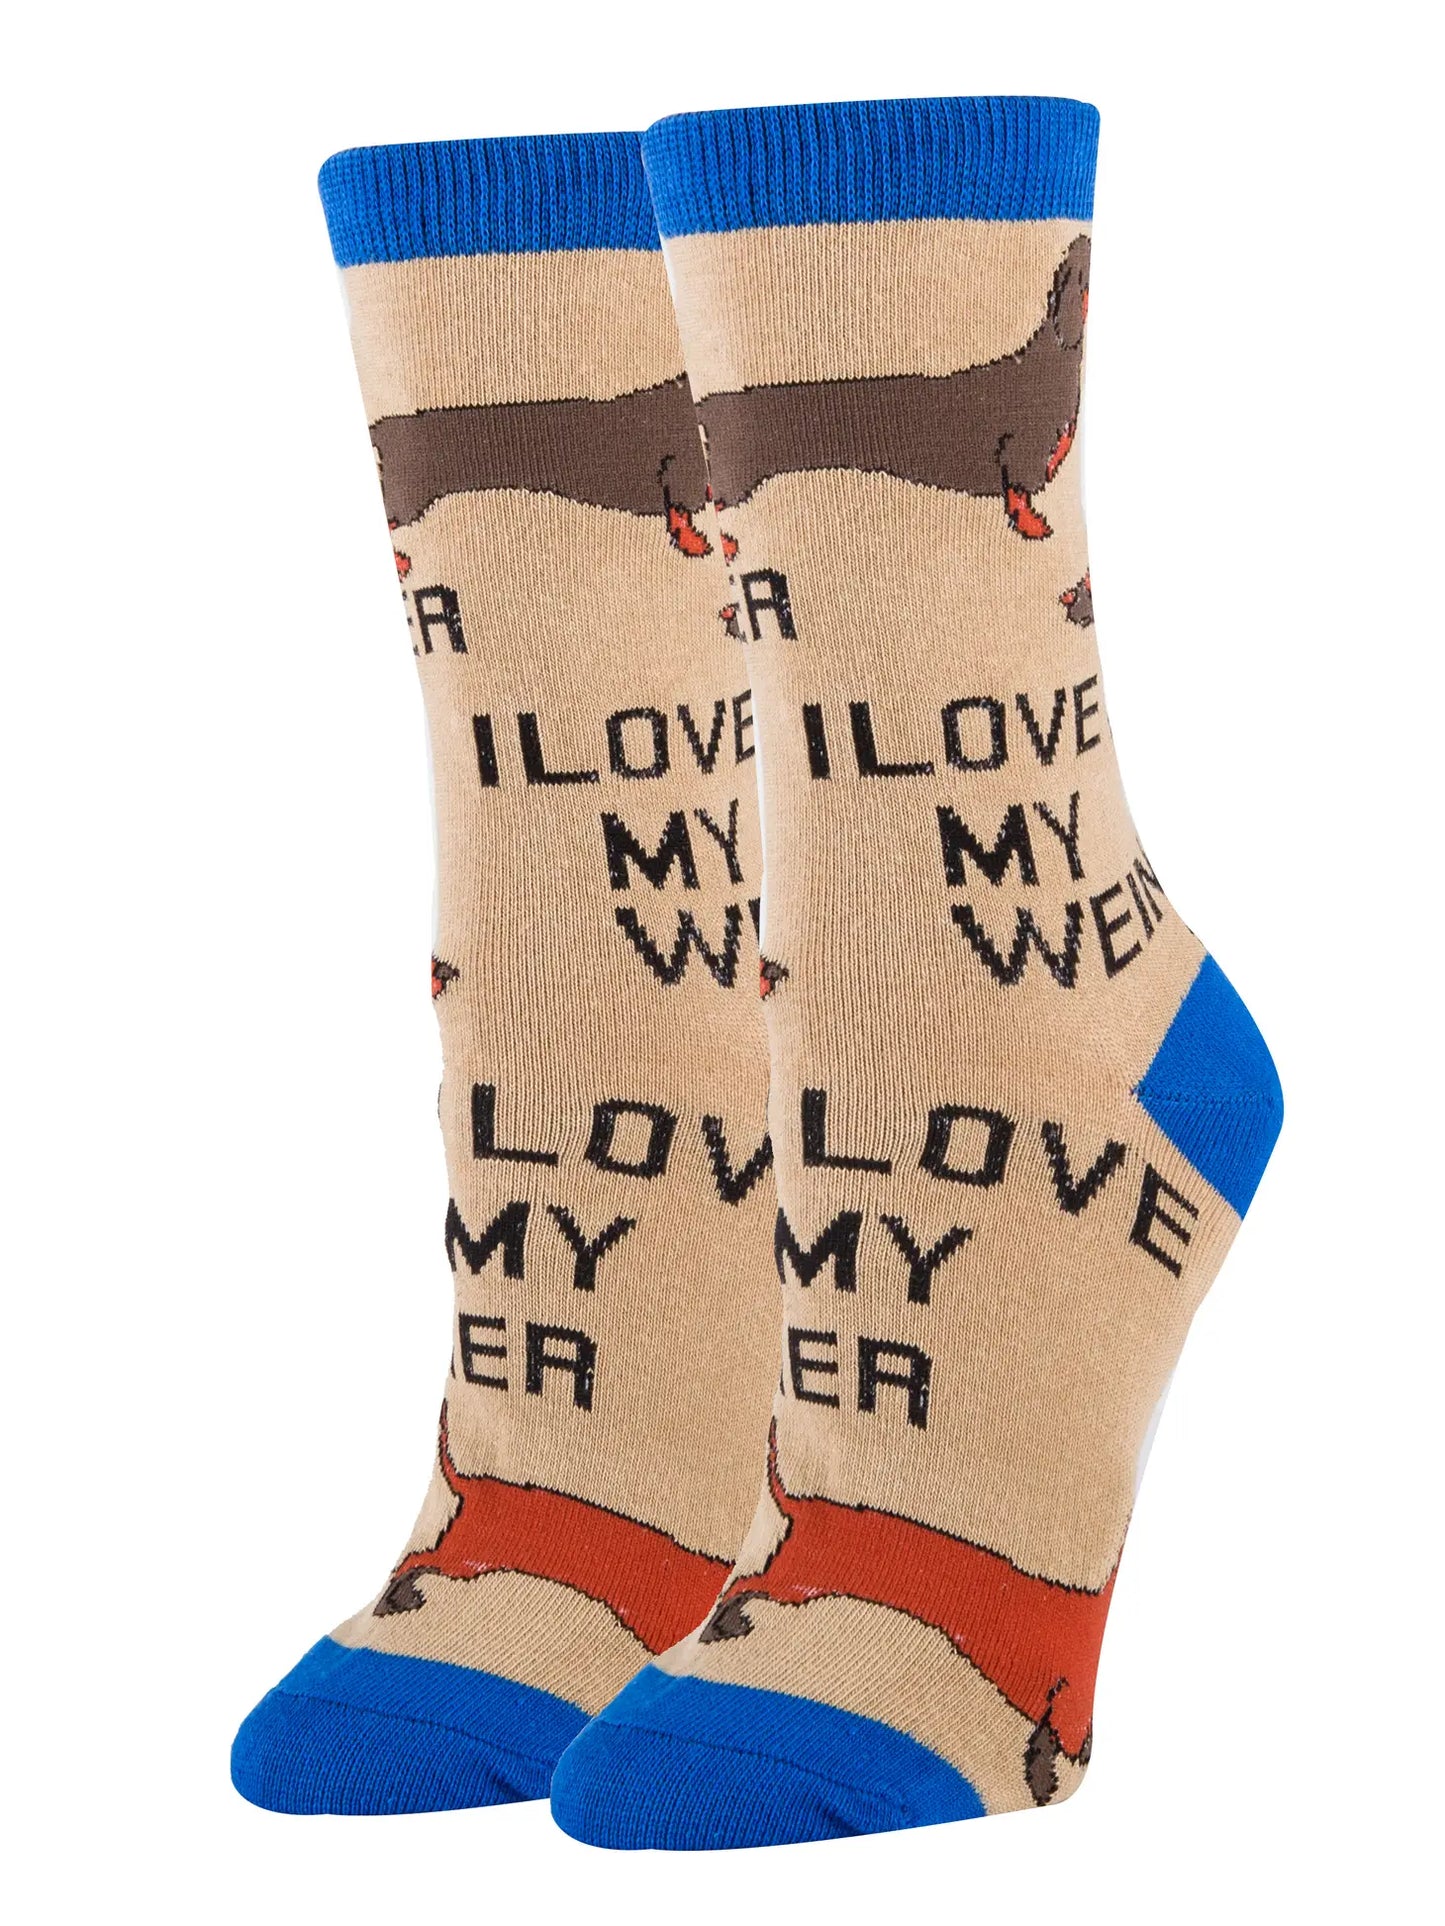 Oooh Yeah Socks - Love My Weiner | Women's Cotton Crew Funny Socks